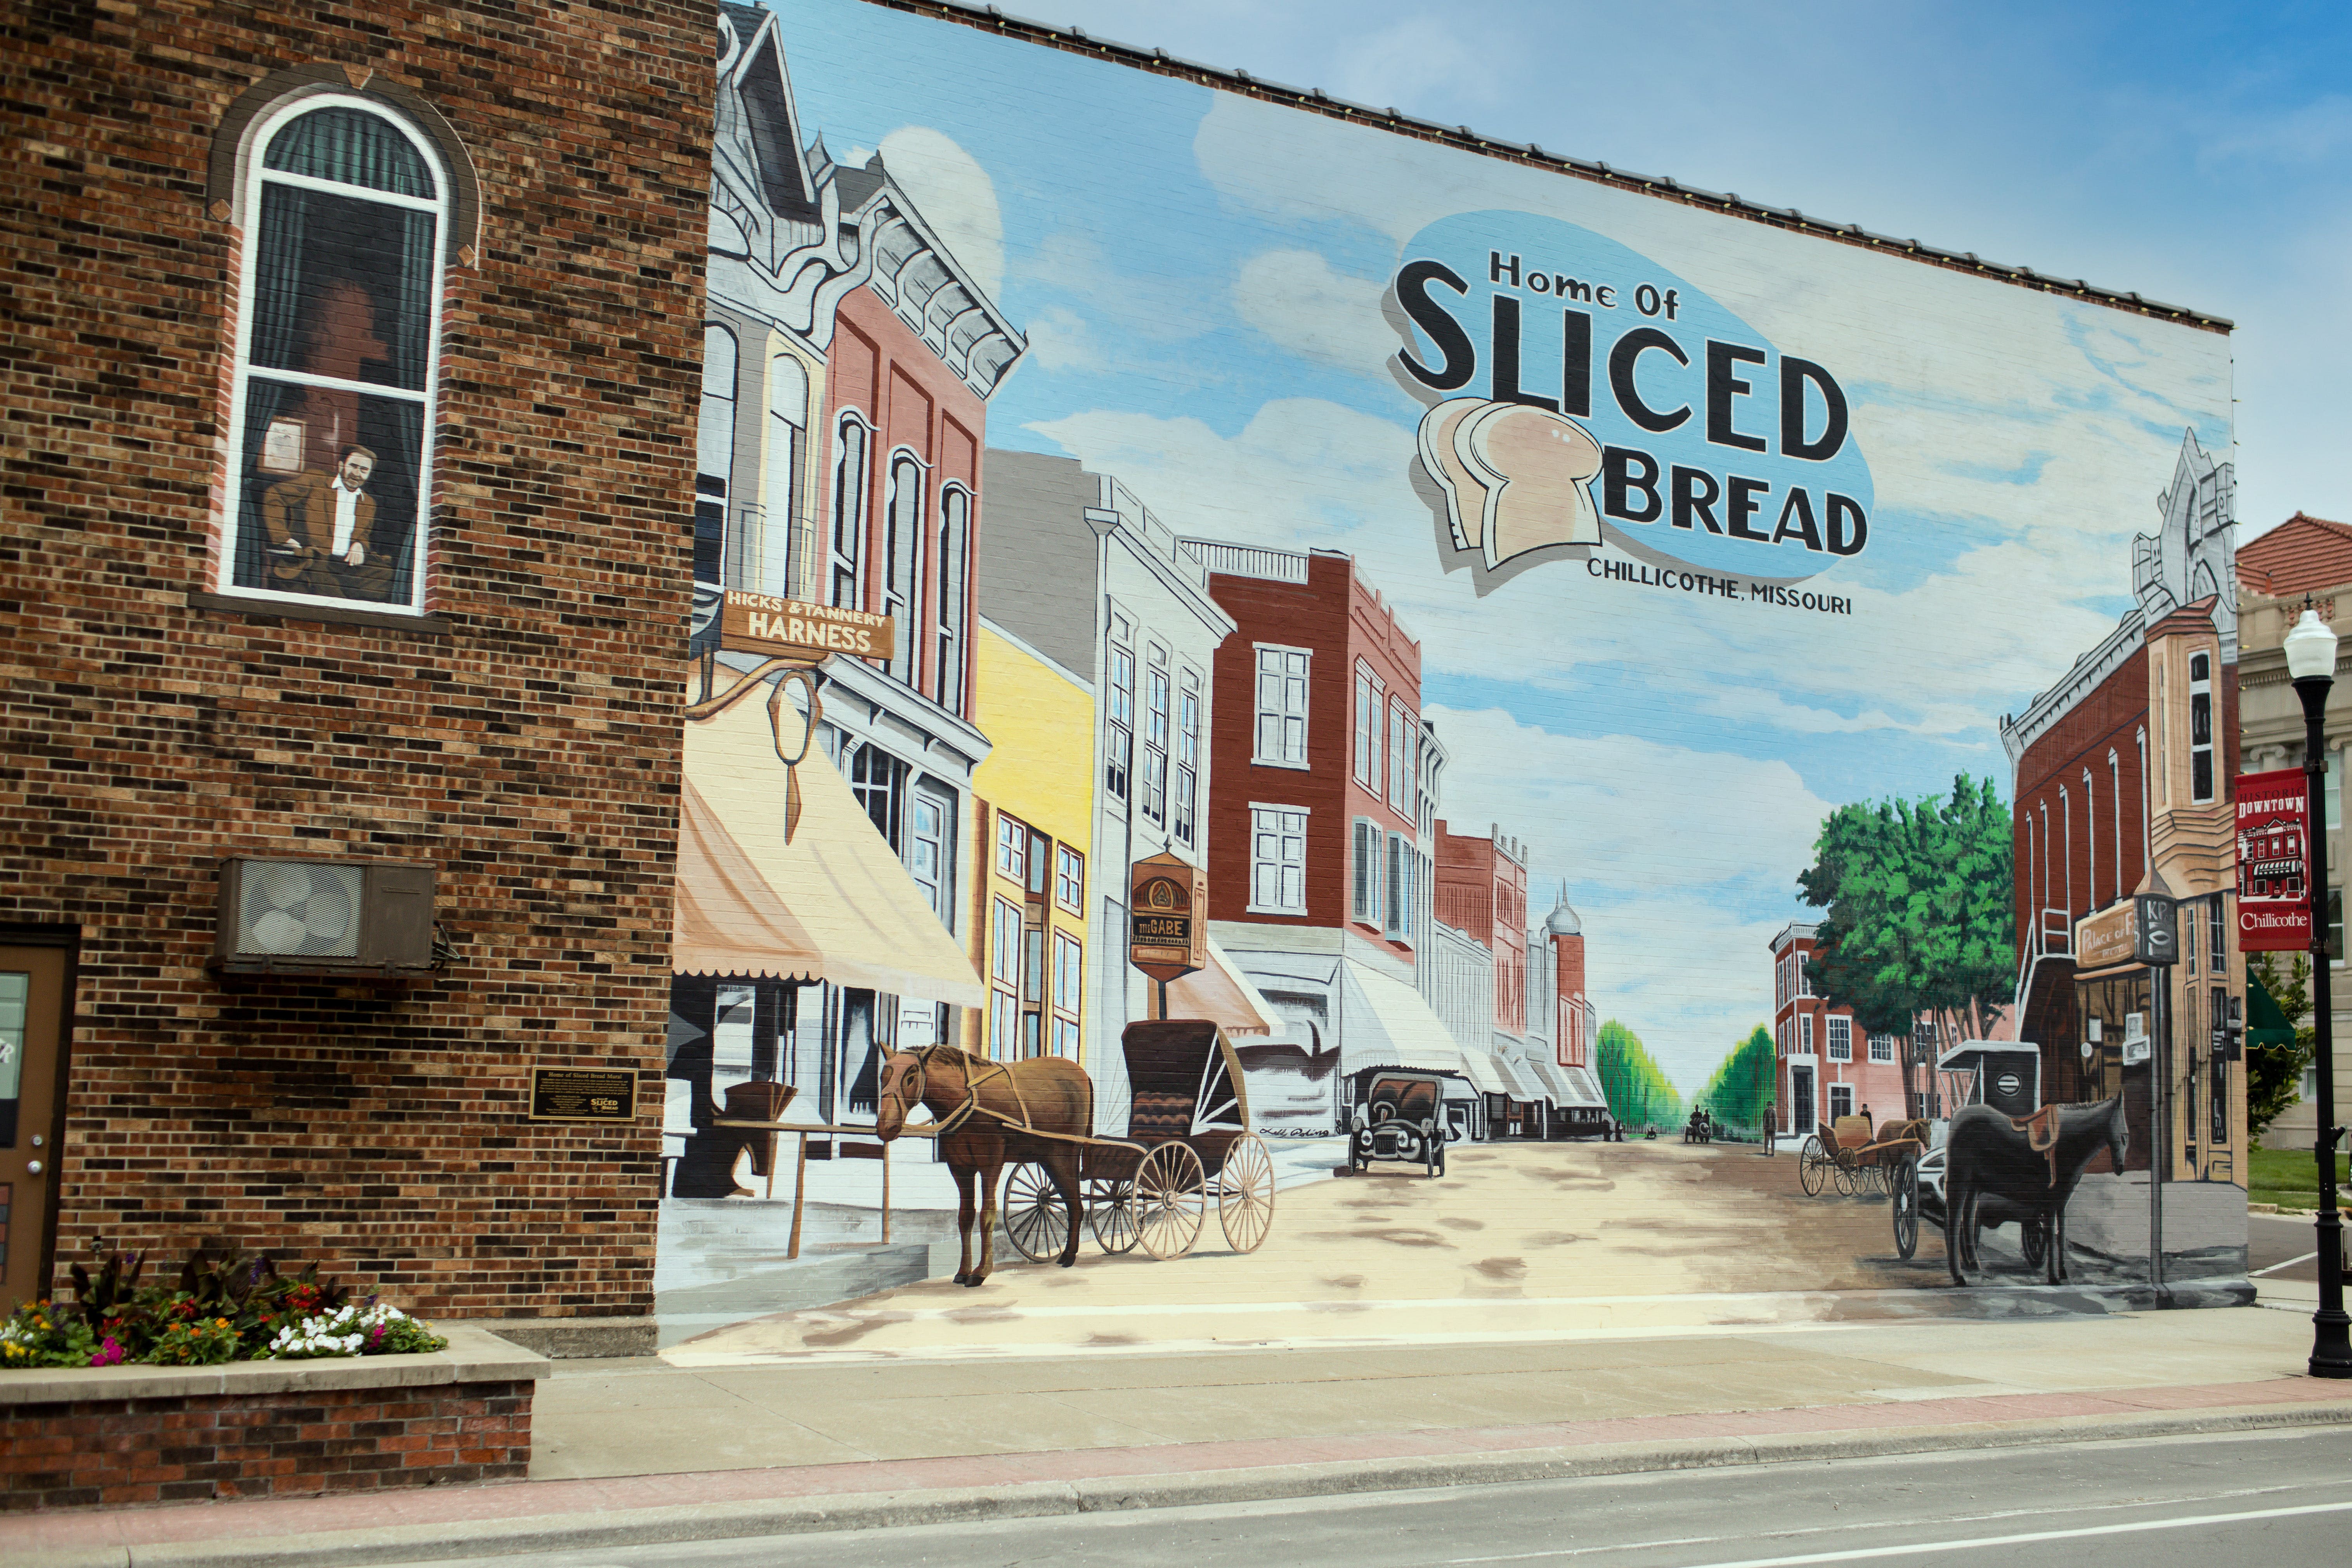 https://static.foxnews.com/foxnews.com/content/uploads/2023/01/MTAW-rohwedder-sliced-bread-mural-chillicothe-1-23.jpg